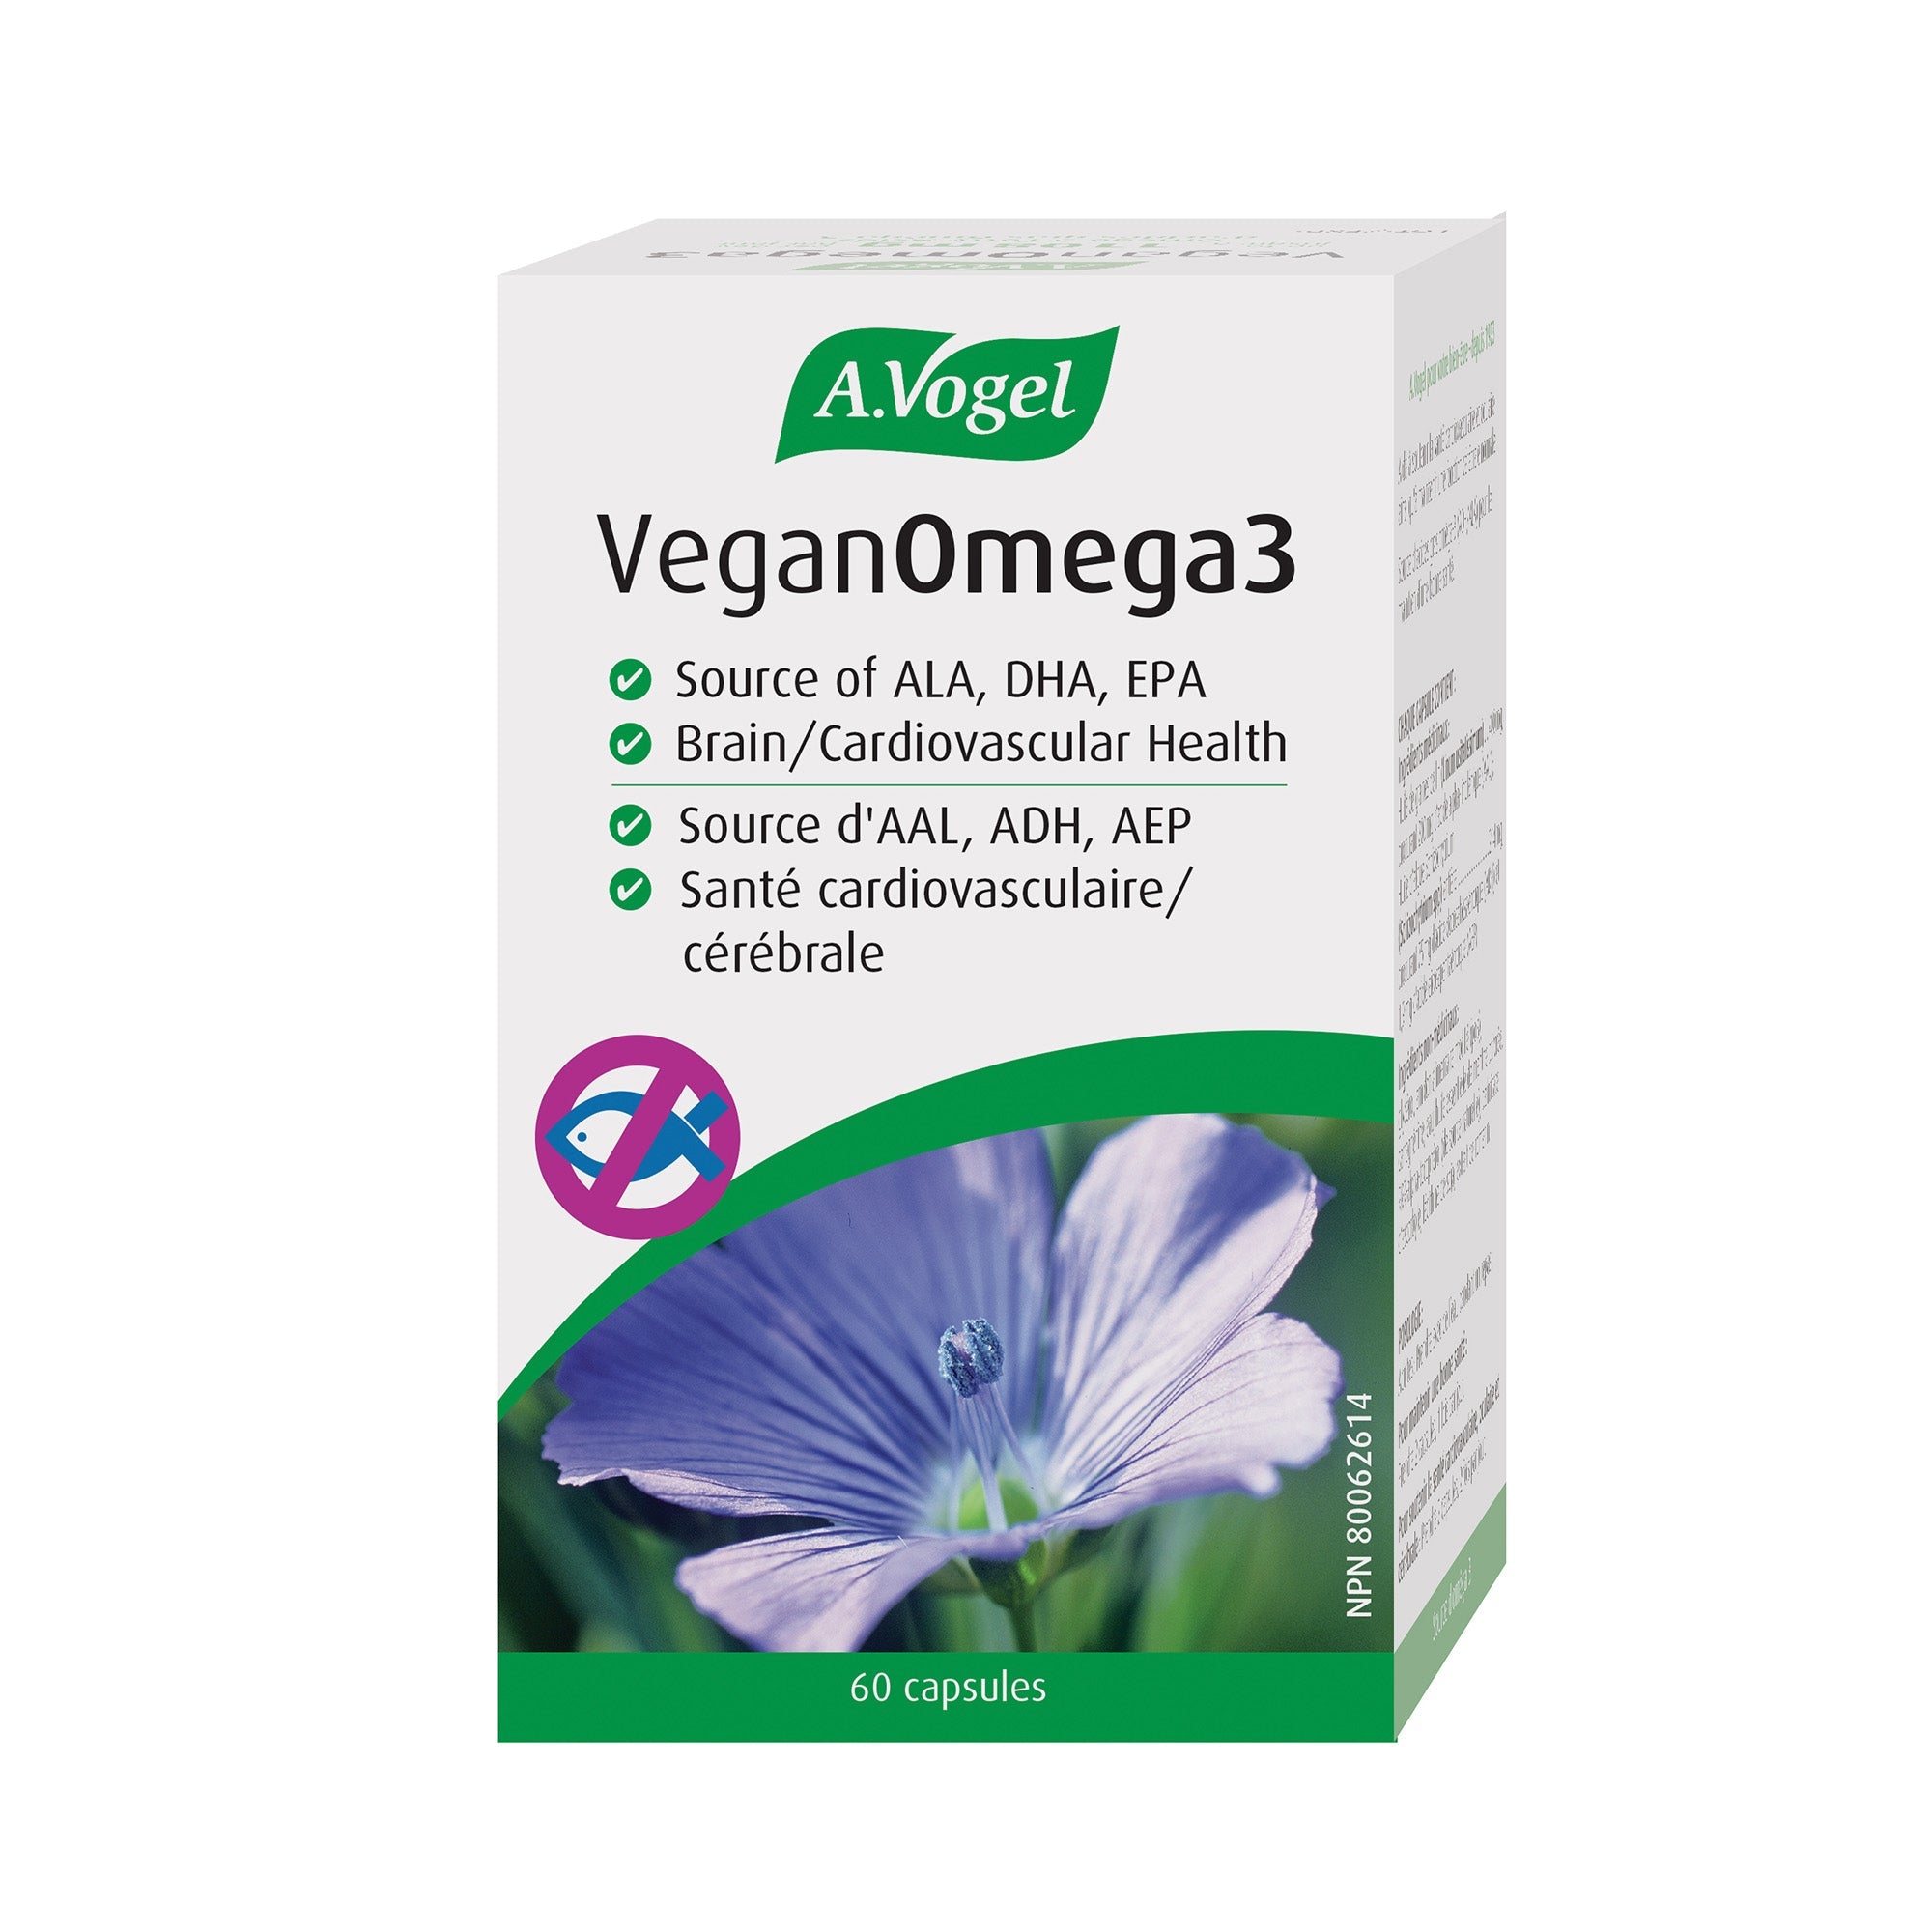 A.Vogel VeganOmega3 100% Vegan Capsules with no Fishy Aftertaste! 60 Caps - A.Vogel Canada